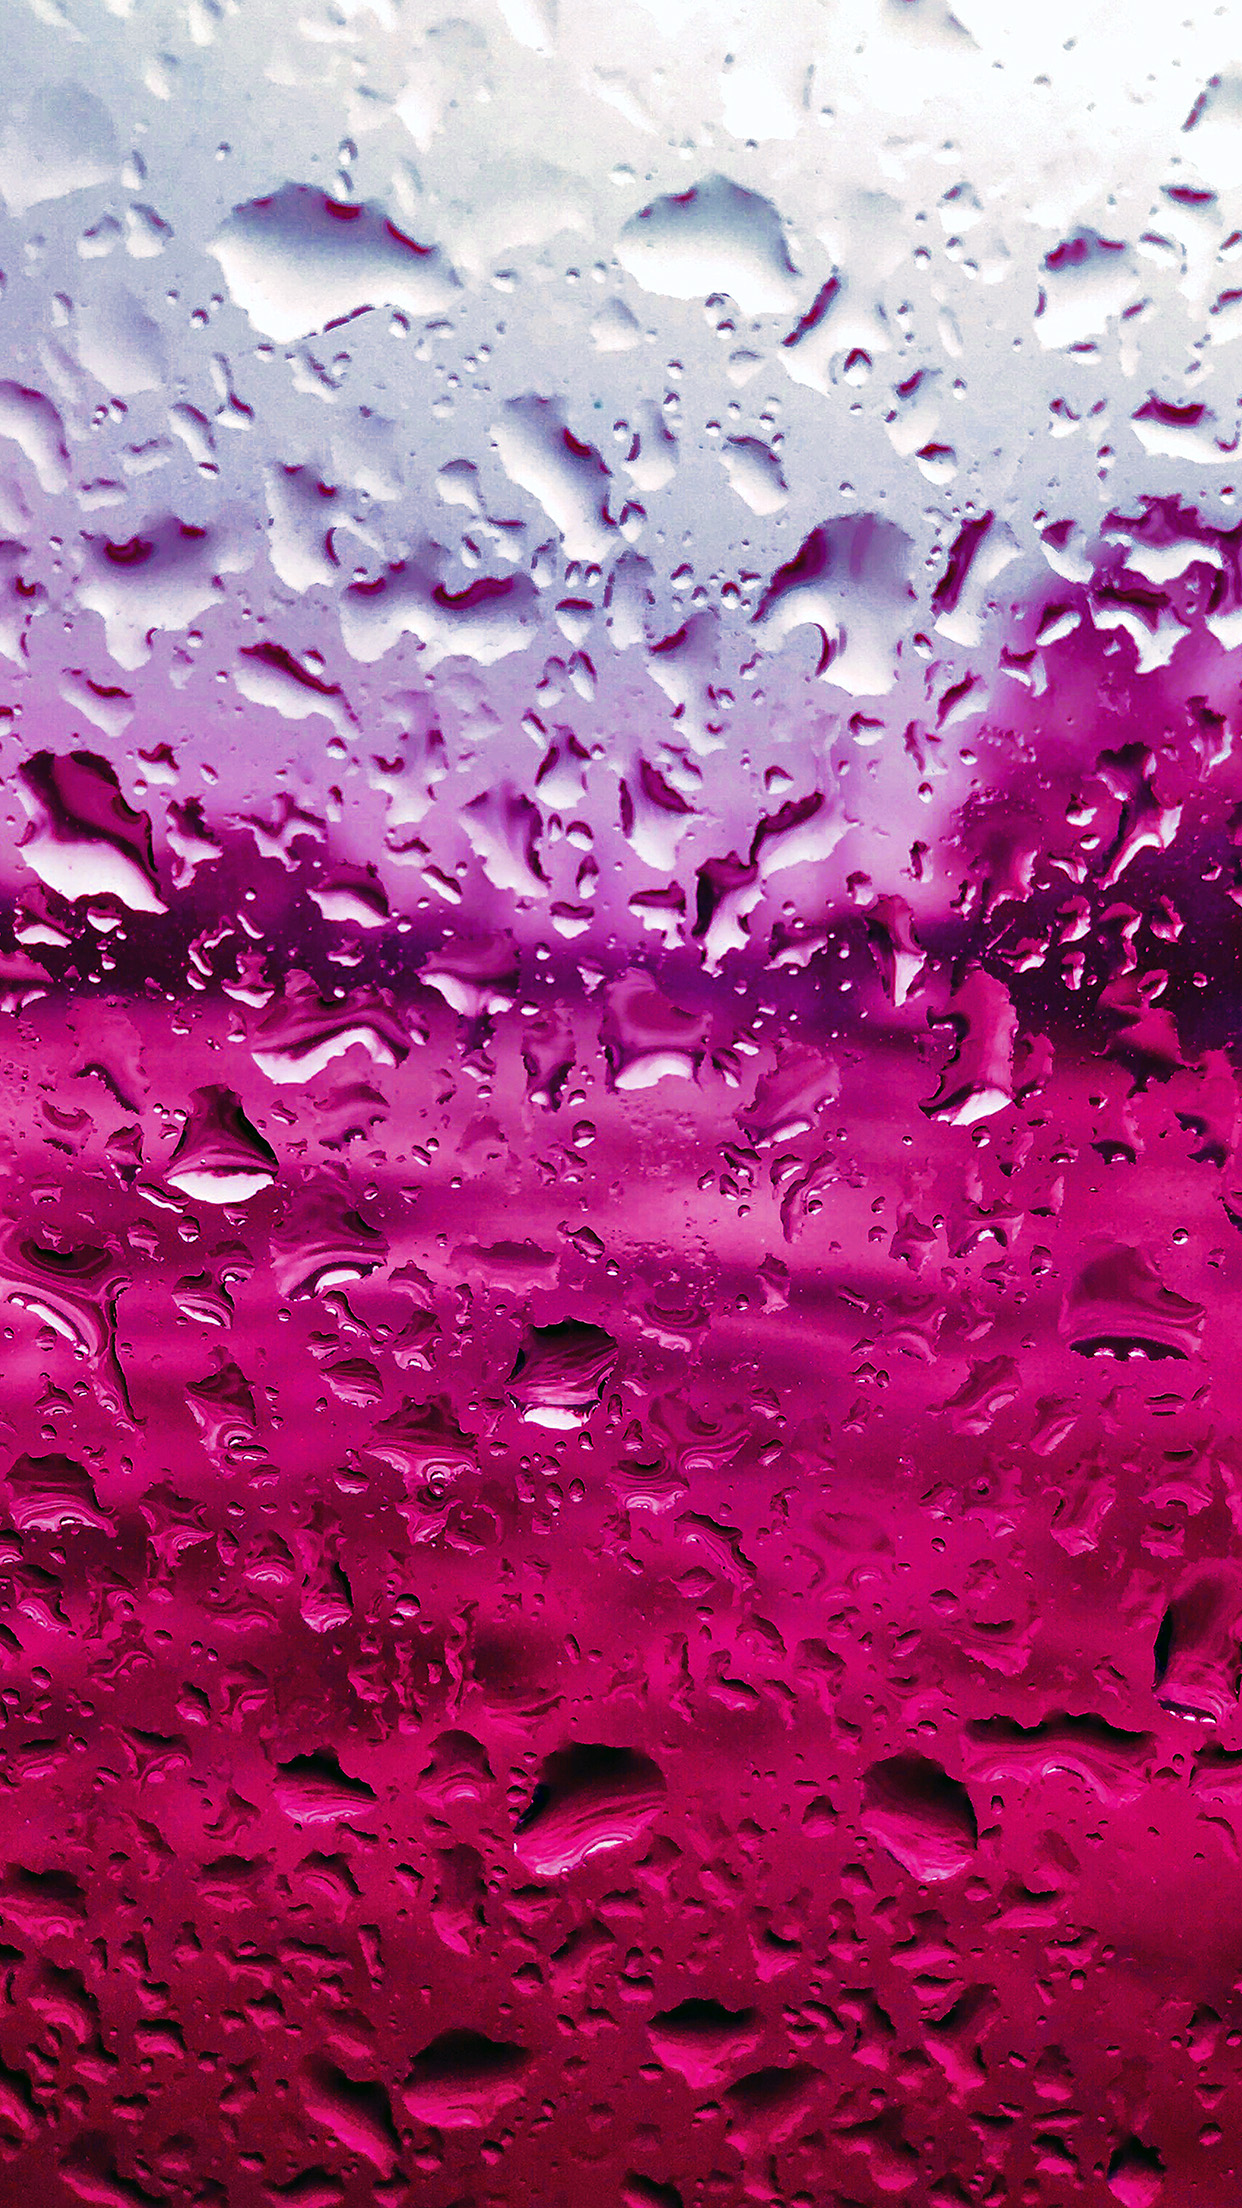 iPhone X wallpaper. rain drop window red pattern